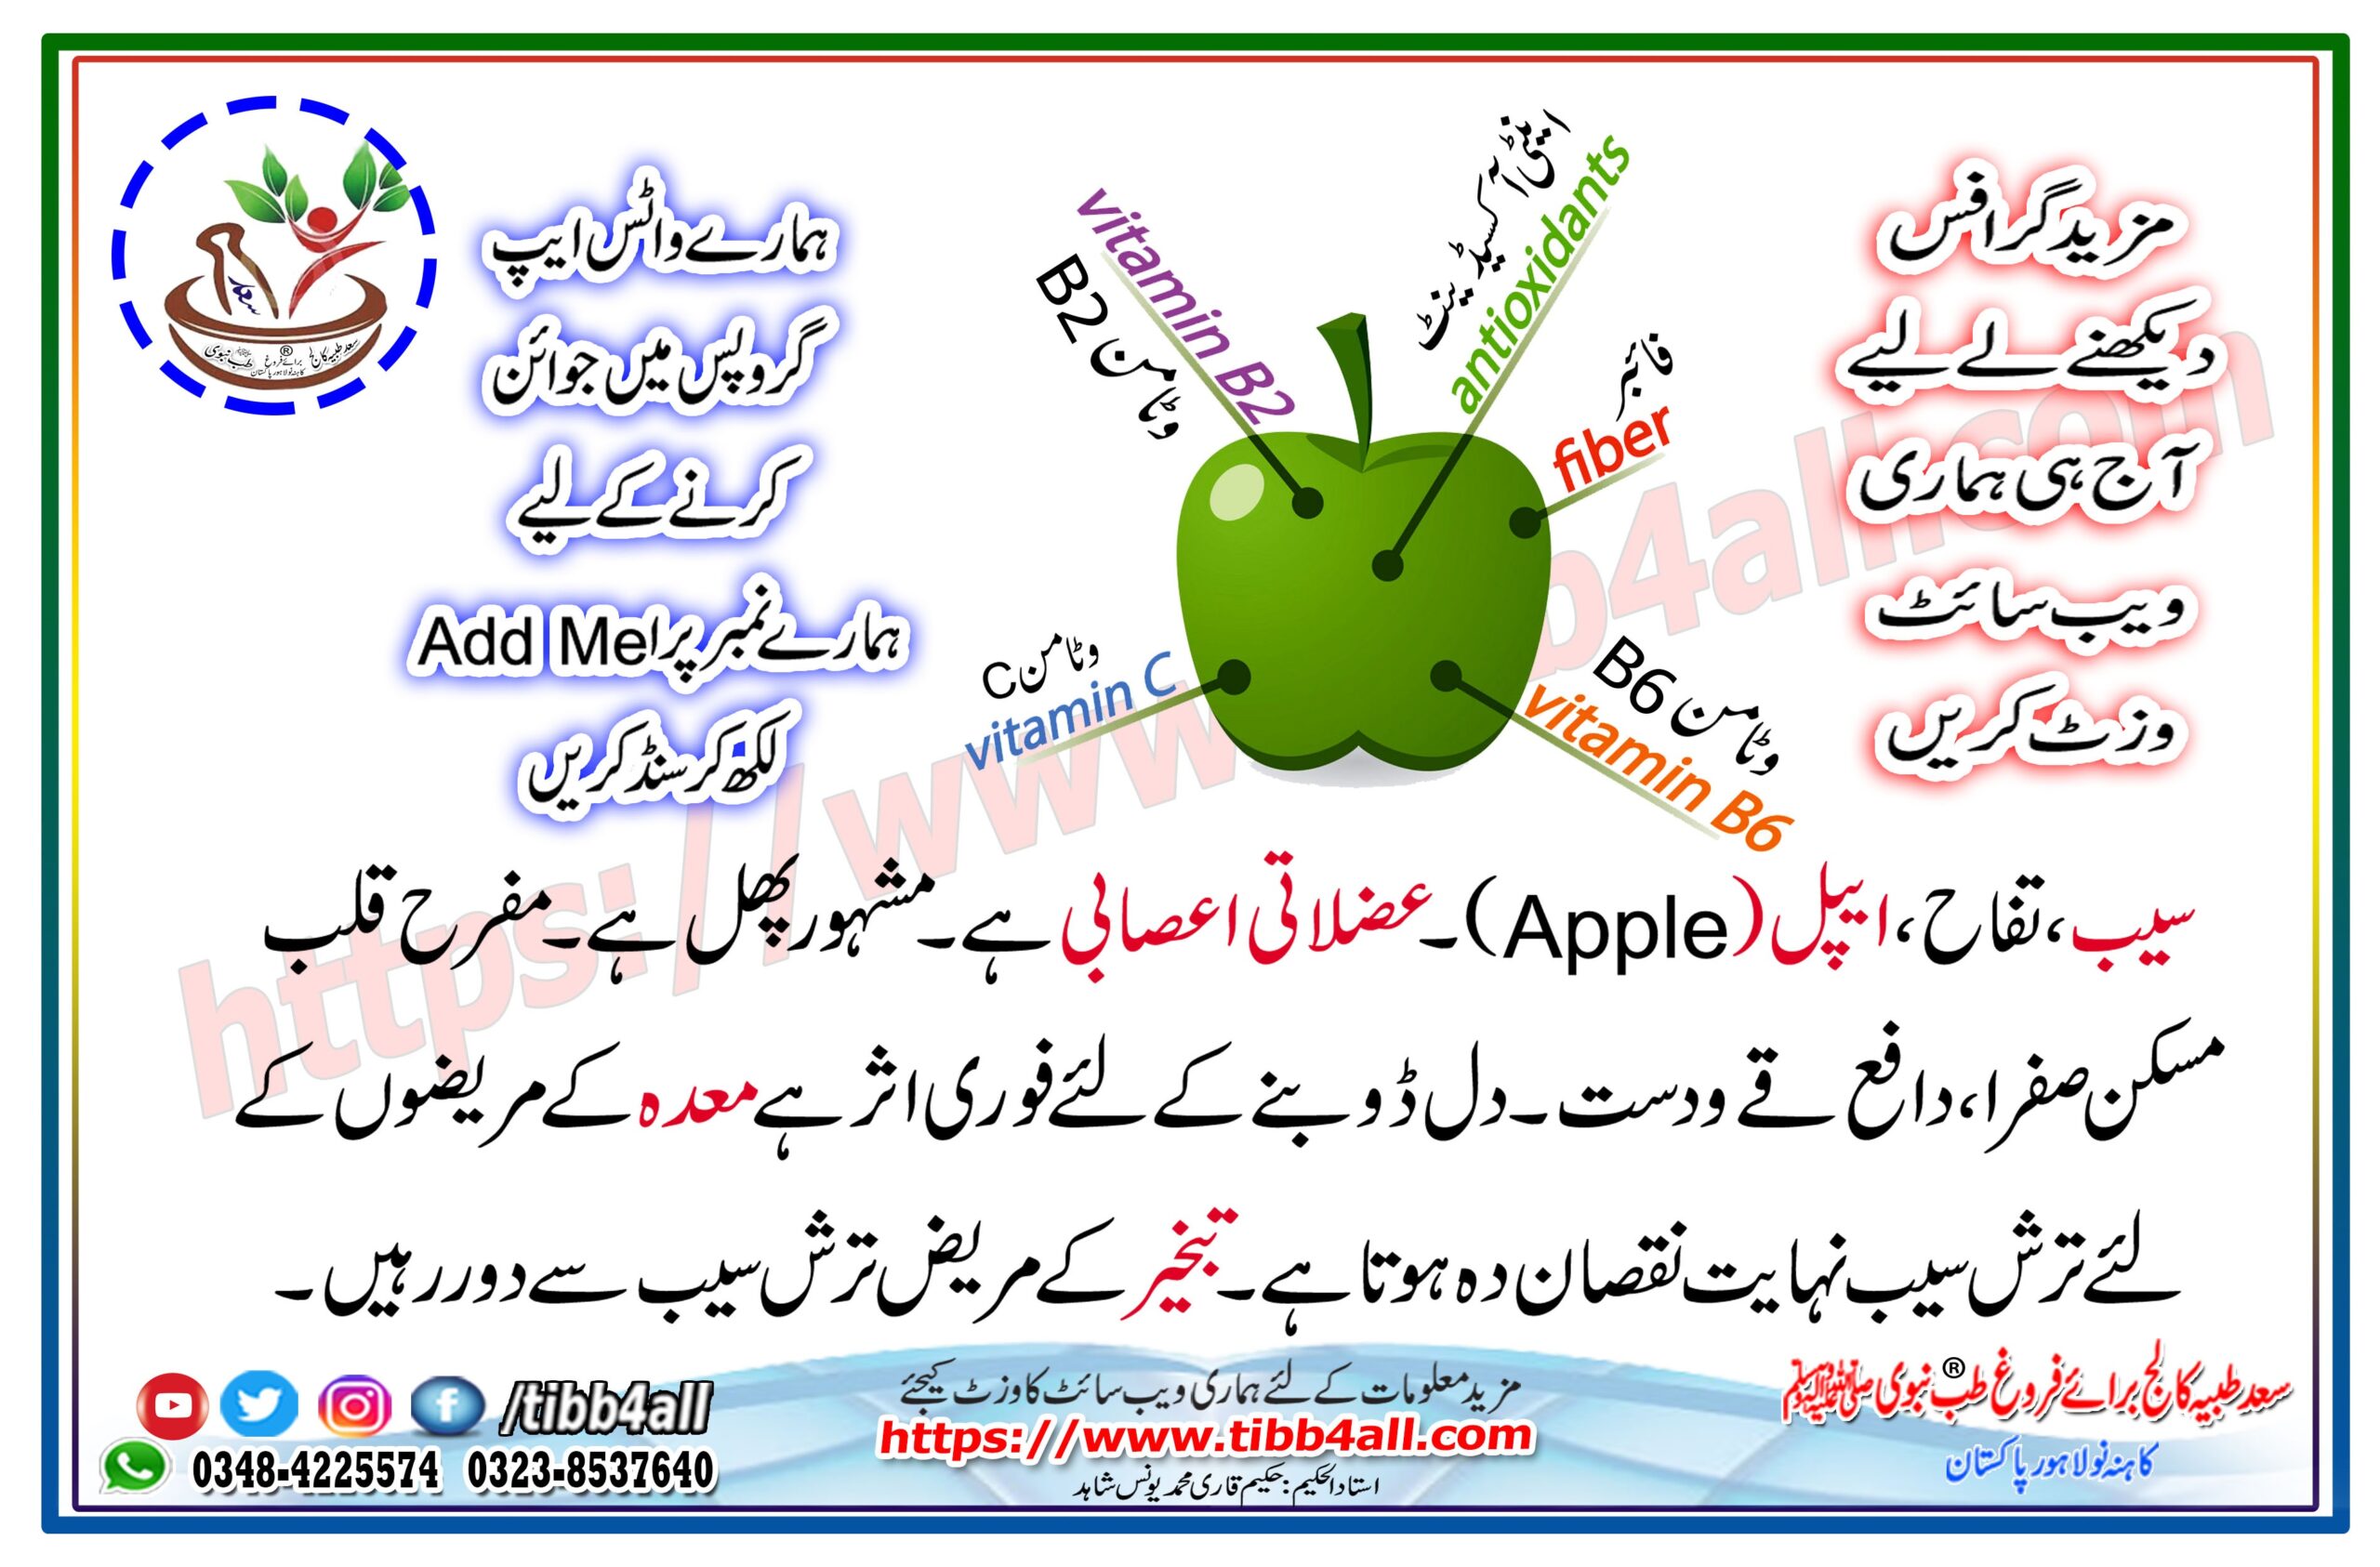 Ten Benefits and Nutritional Benefits of Apples